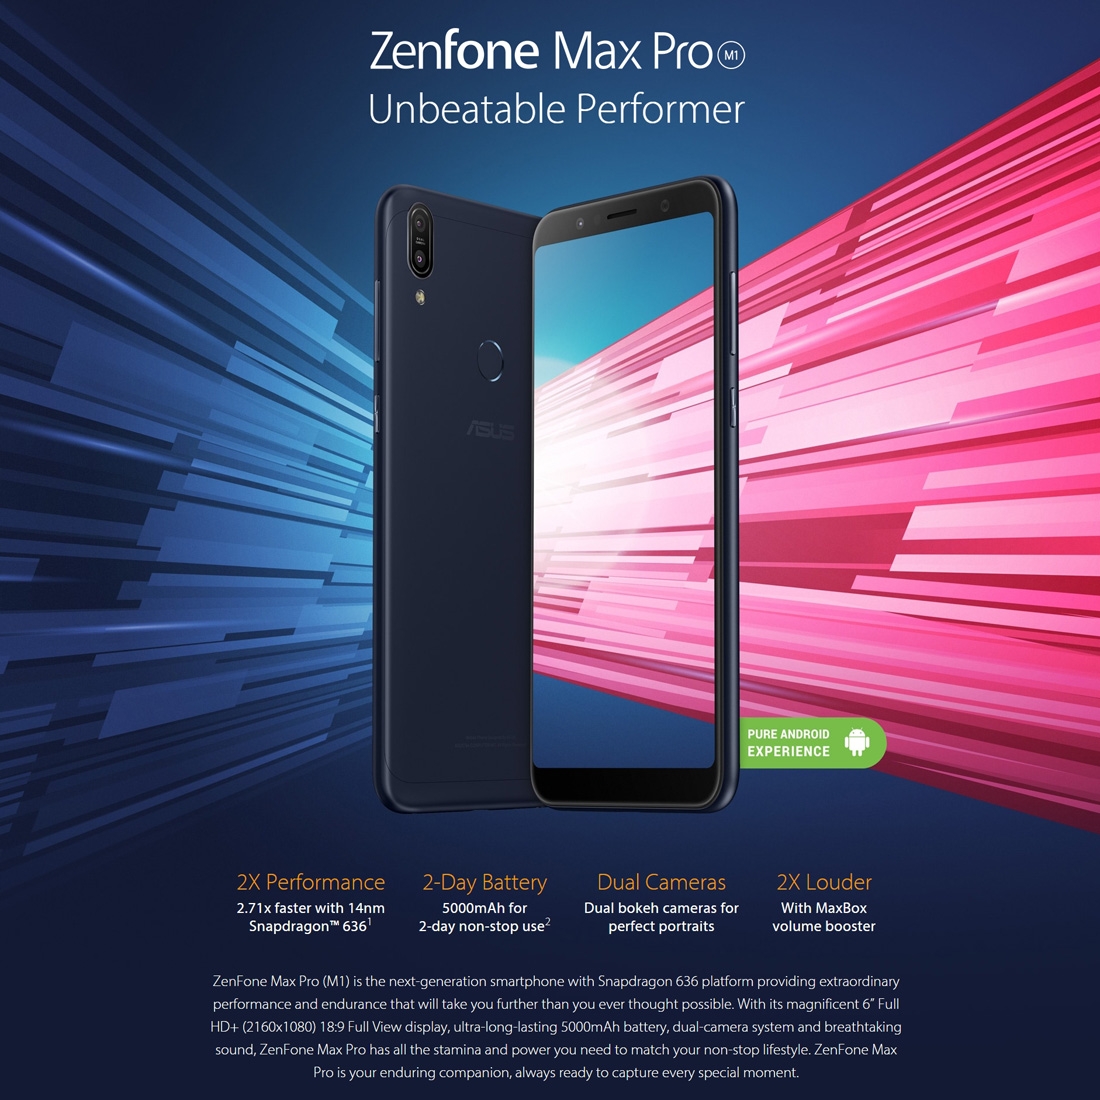 ASUS ZenFone Max Pro ZB602KL 6GB+64GB 6.0" Android 8.1 - Black @ Best Price Online | Jumia Kenya